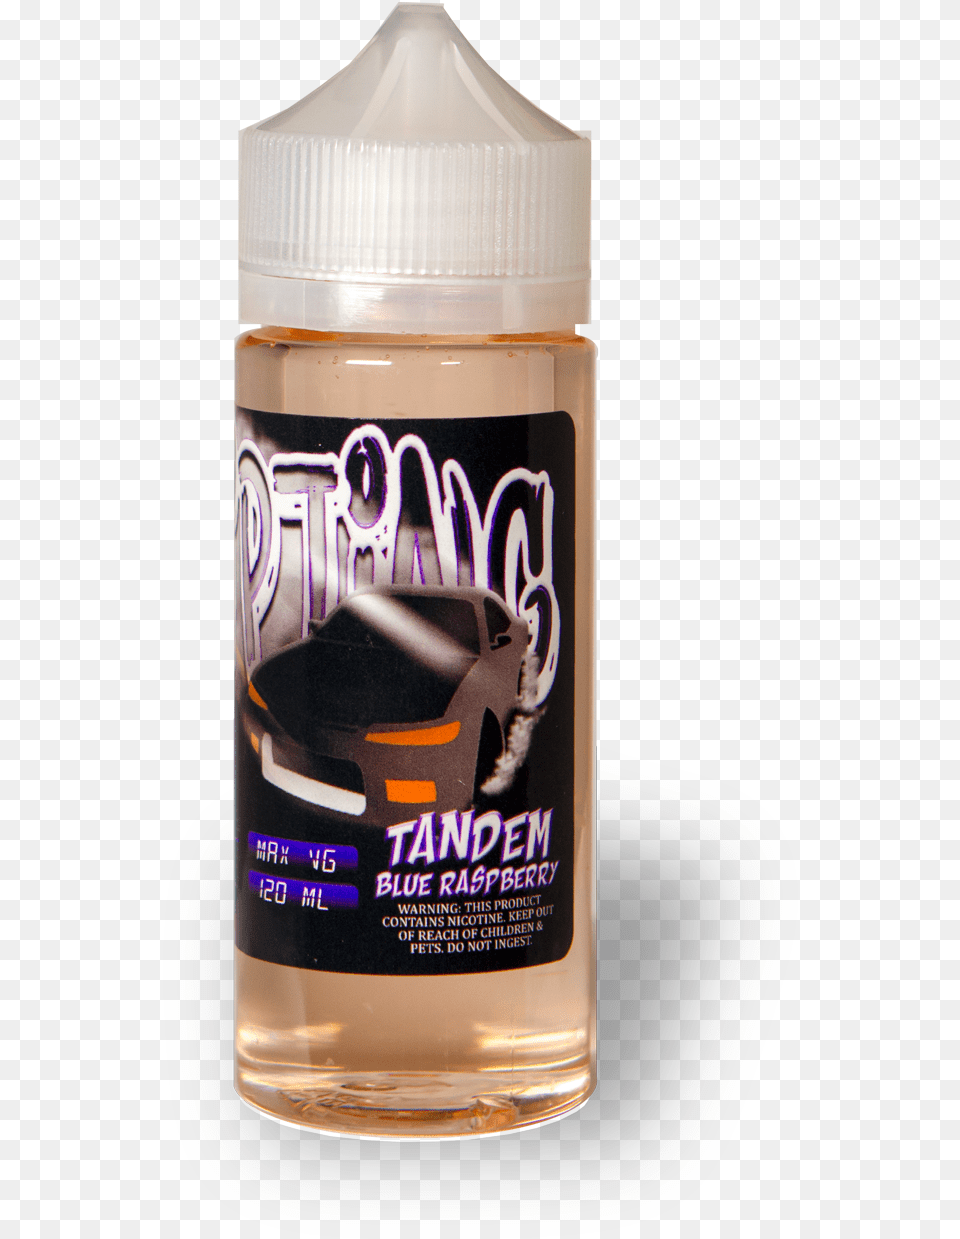 Bottle Of Vader Vape Distro S E Liquid Flavor Bottle, Cosmetics, Perfume, Deodorant, Can Free Transparent Png